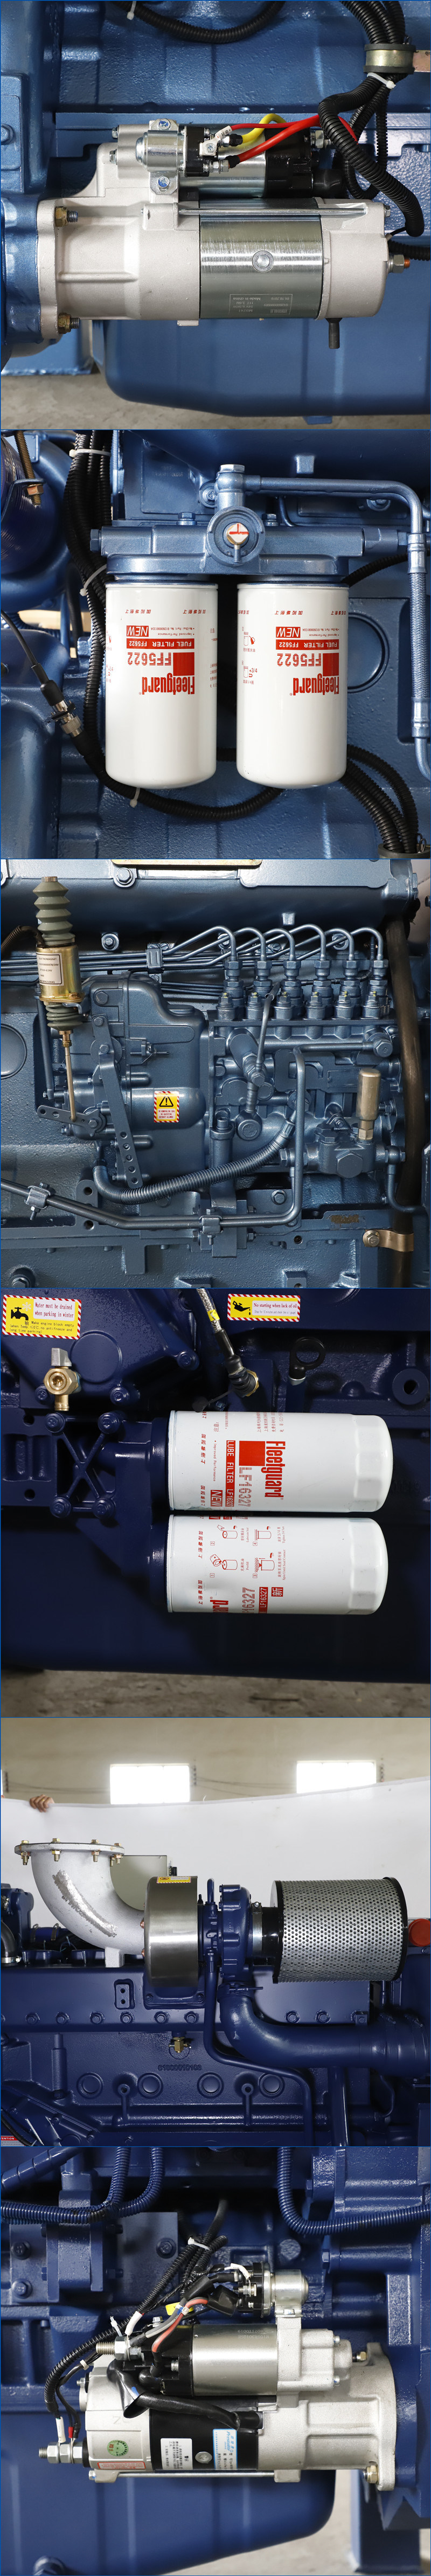 Hot Sale Brand New 240HP 6 Cylinders Diesel Engine for Marine Engine